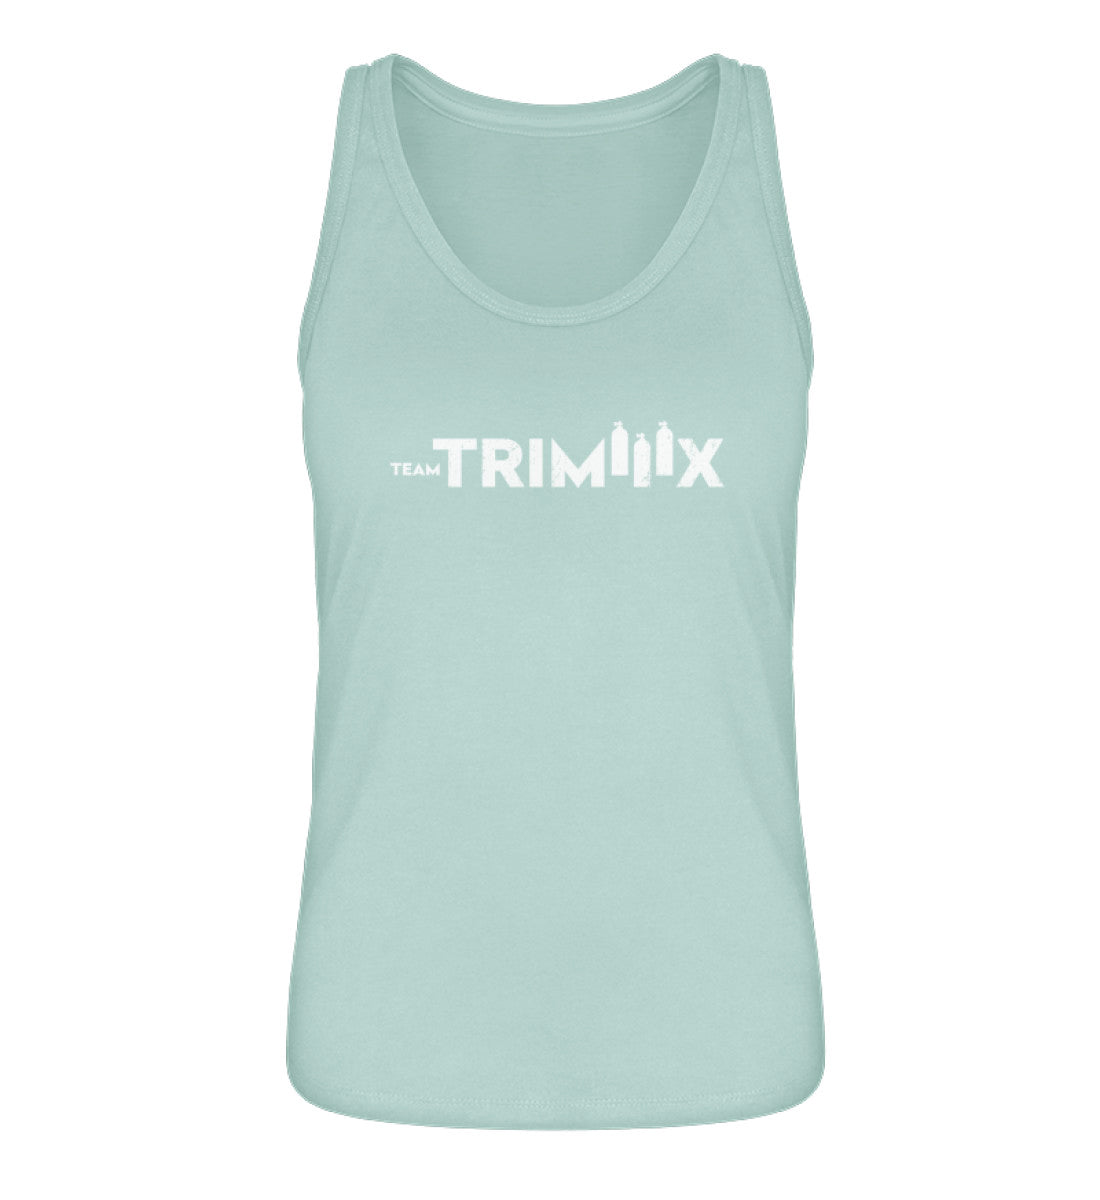 Team Trimiiix - 100 % Bio Frauen Tanktop